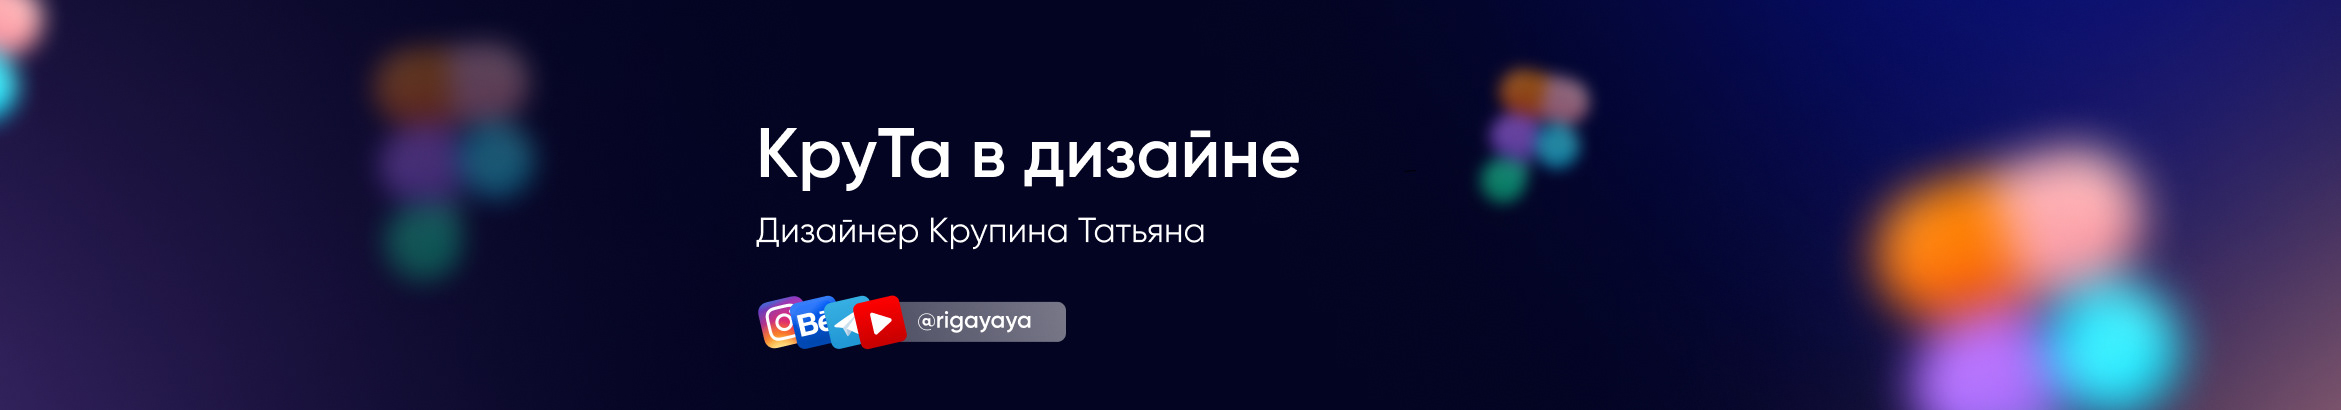 Tatiana Krupina's profile banner